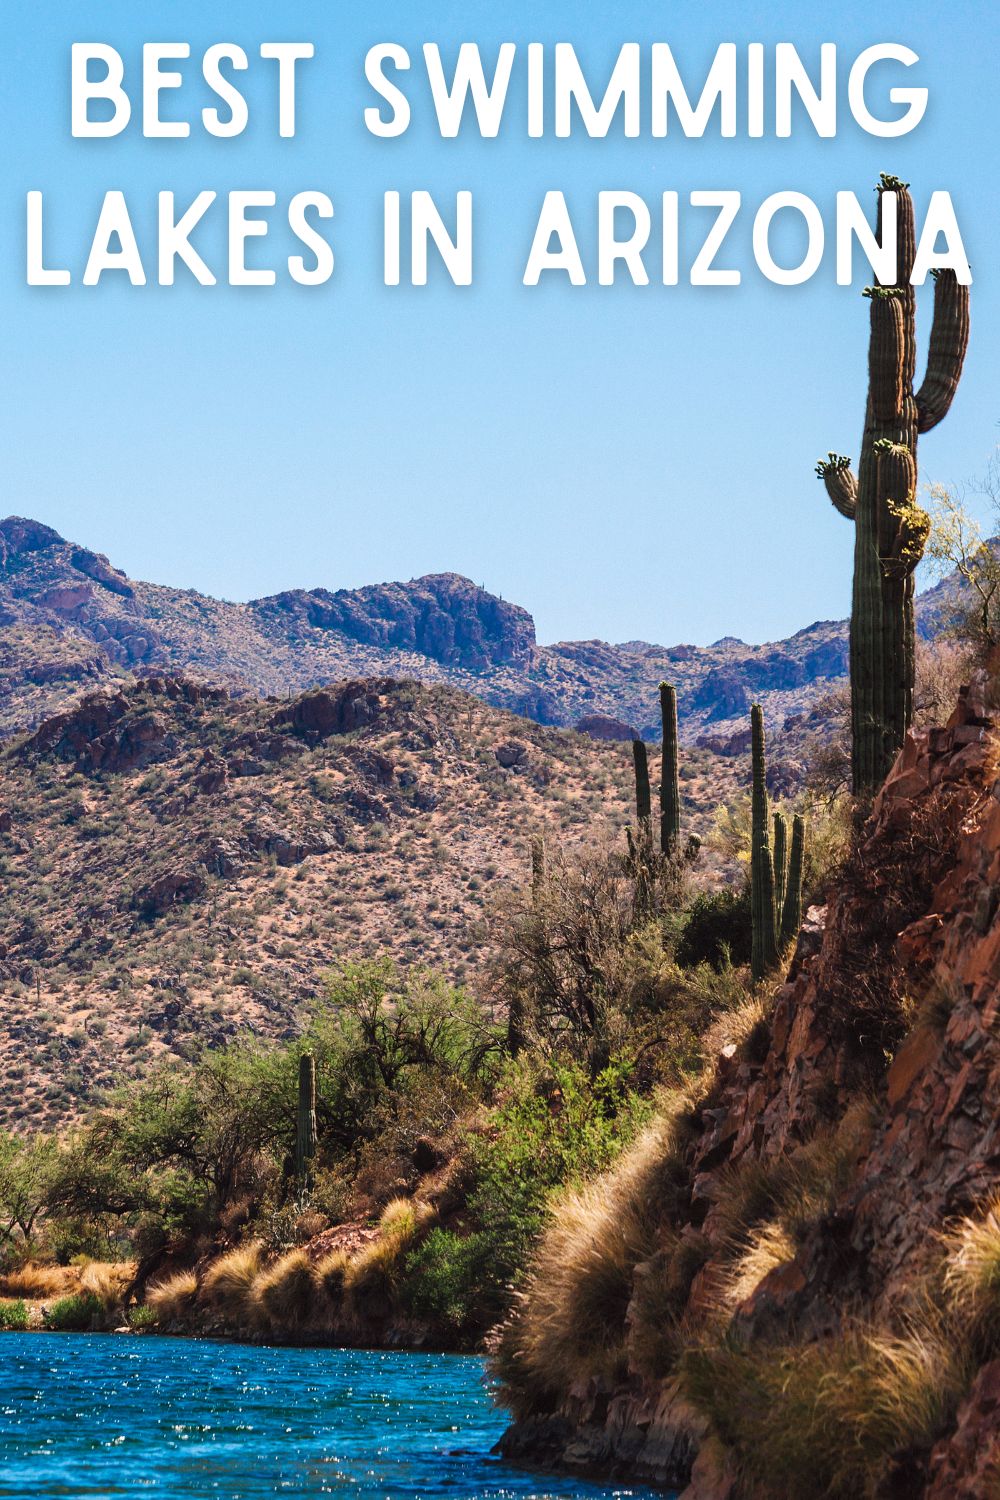 Best swimming lakes in Arizona.